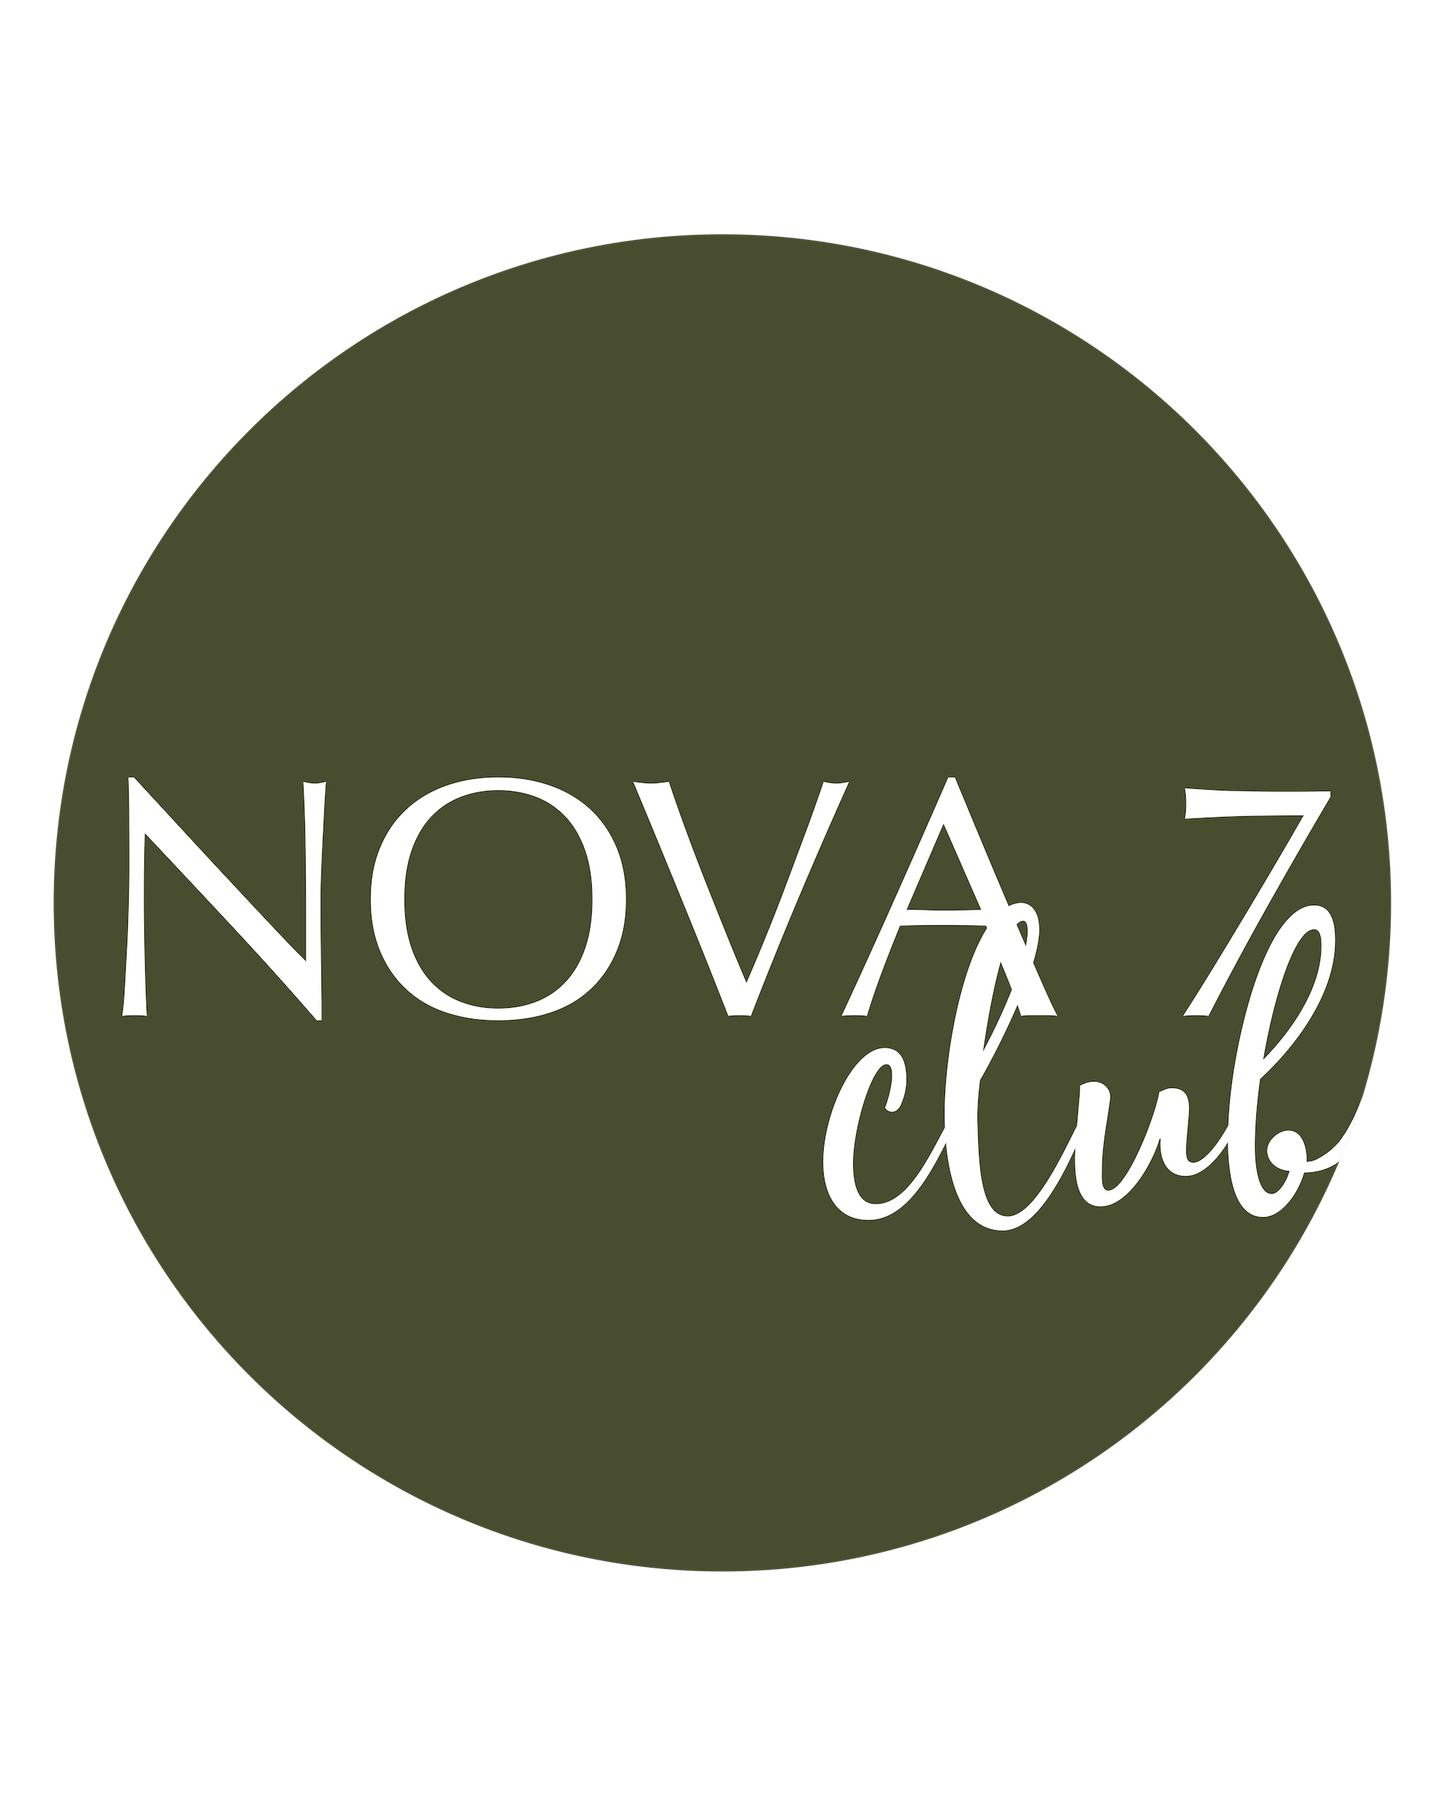 Join The Nova 7 Club